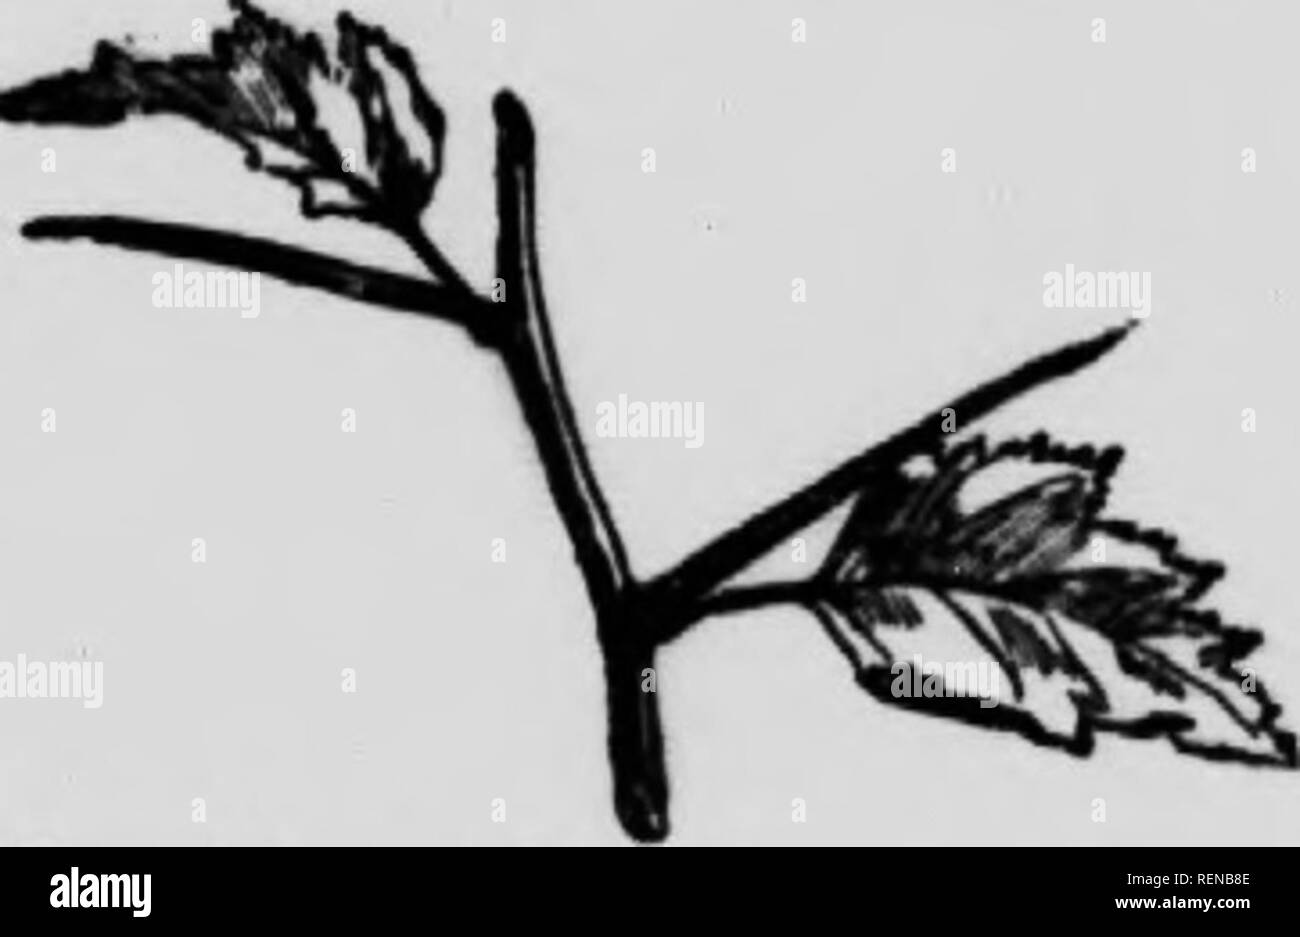 . Selezionate la flora occidentale [microformati] : Manitoba, Saskatchewan, Alberta. La botanica; Botanique; botanica; Botanique; botanica; Botanique. ROBAOEiE - â ¢ â". Â¢cicuUrii, LiiKjI. dilali.,1 Klu,âiul,.r-r,li,âv ,â r,..inâu,; hall.t. Thiekot., Man.-Al.u., non woll definito. 3- R. praUncoU. Oreene. Stenw bassa, molto pungente; ,tiââloâ più stretta o 1,.â ¢ plââ,|ul,r-â,o,hâ,i. Foglio illustrativo, 7-11' elliplieal a ol,lââe,.âlate, prâ,âiâeâ,|y venato- fiore. pâ,k diventi bianca, u.ually in eoryn,l.Â".' (Â". arkansdw. Porter.) praterie, uomo - lta 67 riempire. .V). Â Stipille.sof RoNi pra- tinculu. n. PT?Hns. .TvT." 2-Wn^*^ Foto Stock